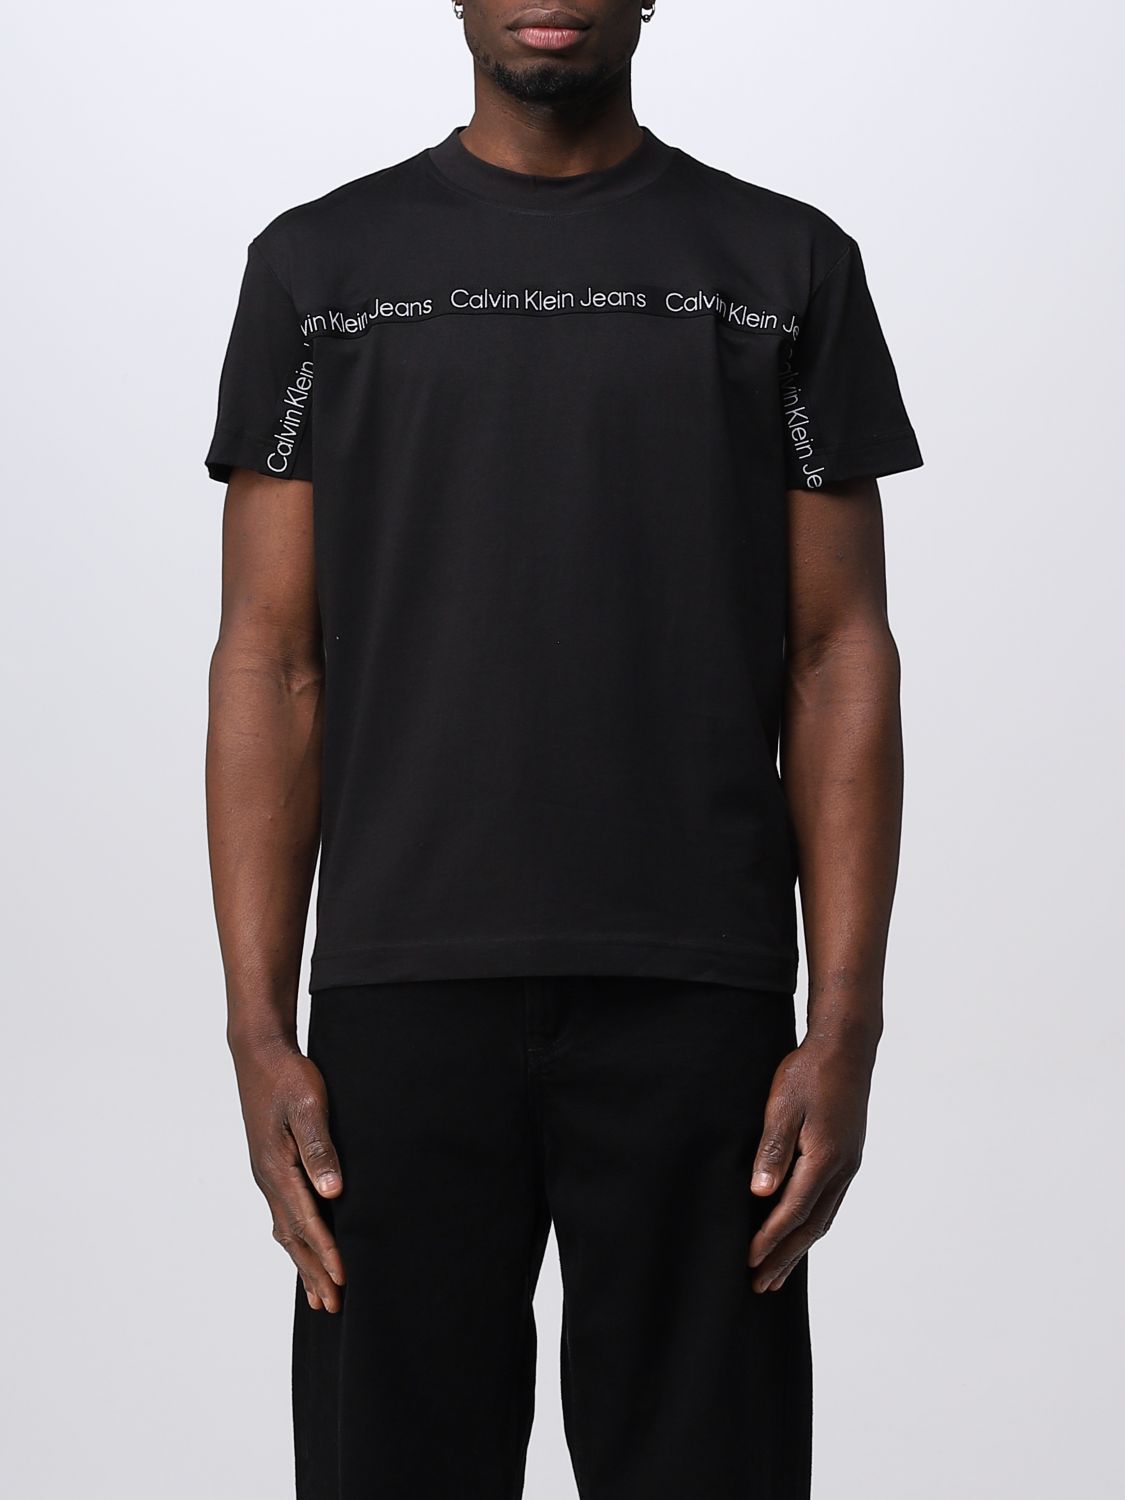 CALVIN KLEIN JEANS: t-shirt for man - Black | Calvin Klein Jeans t ...